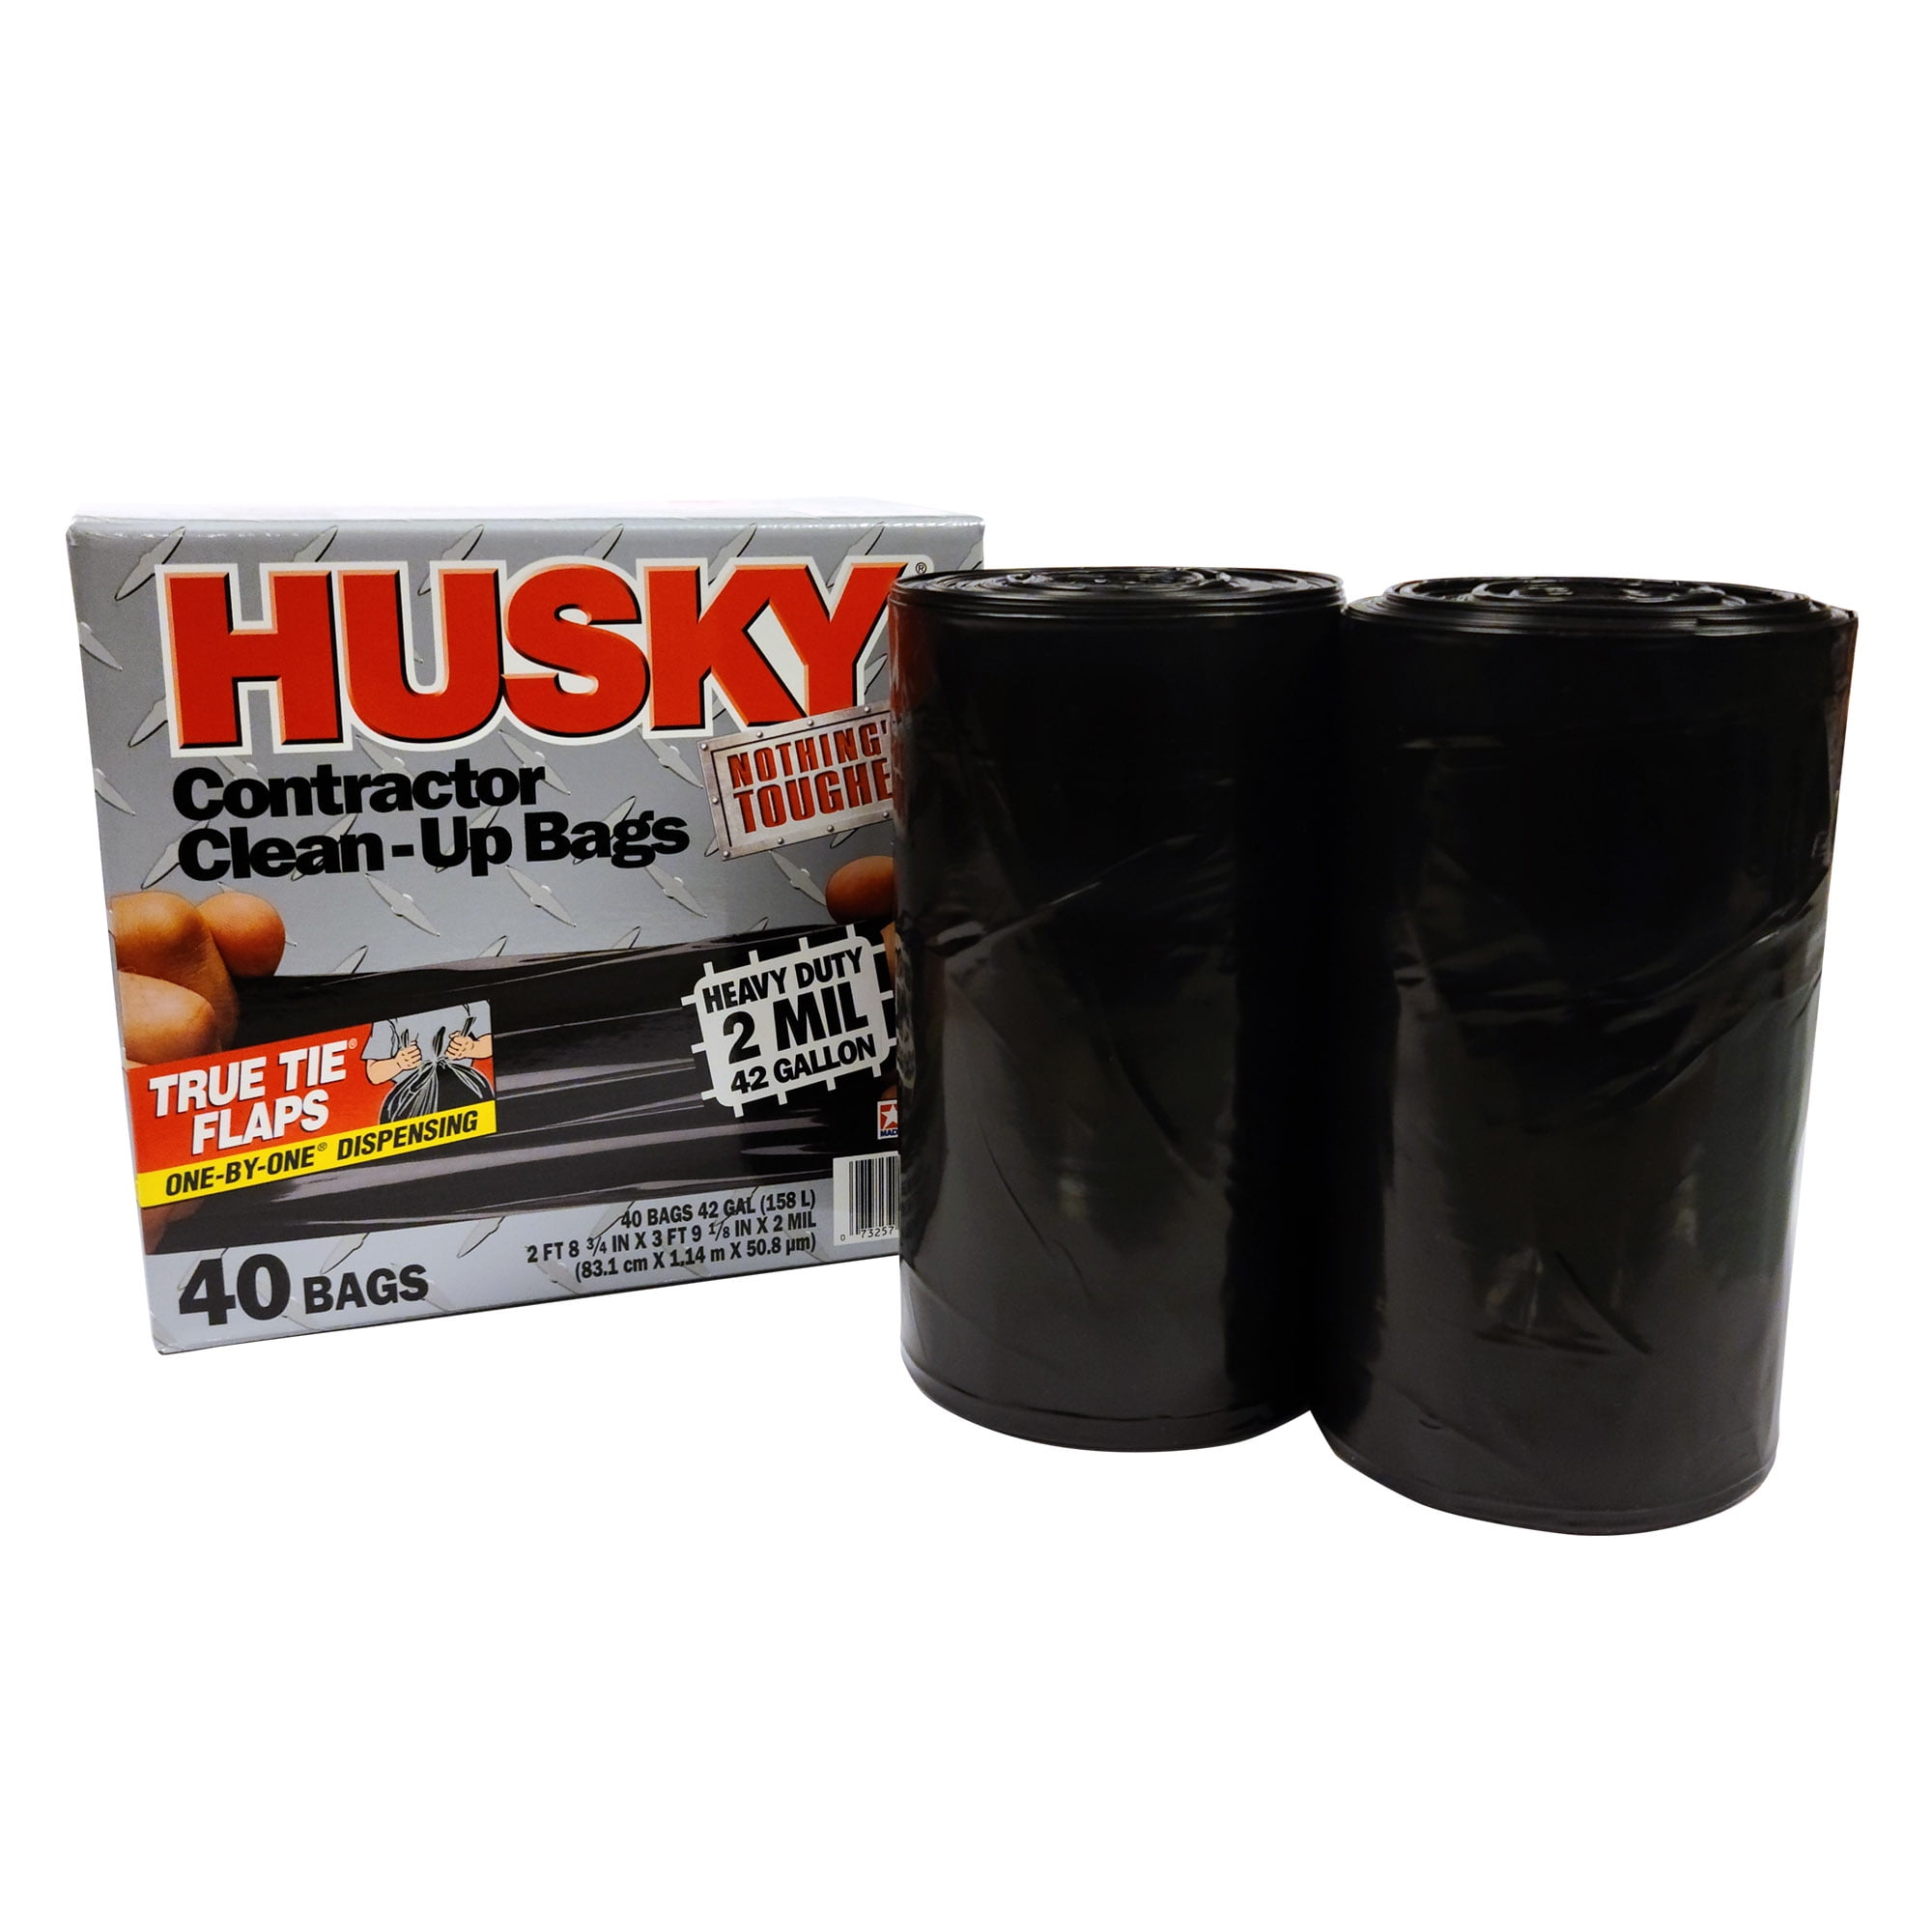 Husky 42 Gal. Heavy-Duty Clean-Up Bags (200-Count) HK42WC050B-4PK